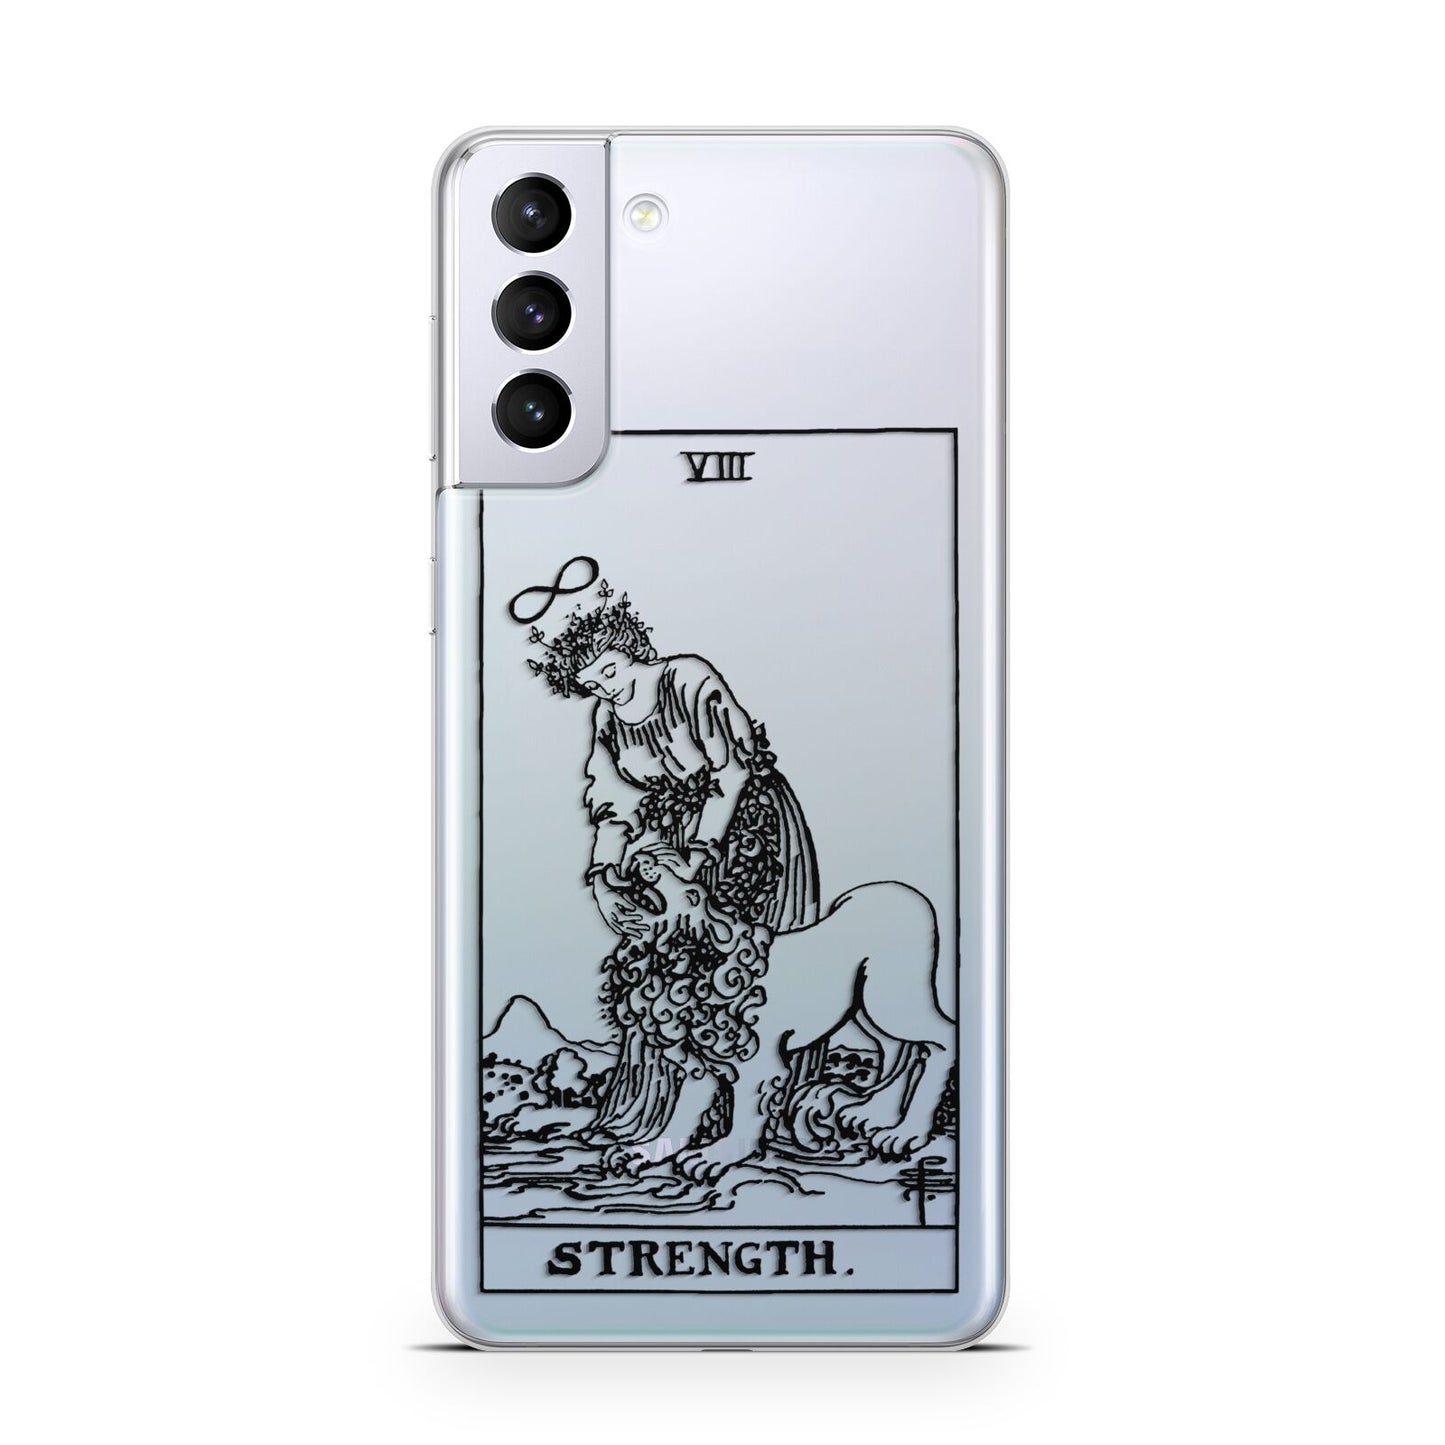 Strength Monochrome Tarot Card Samsung S21 Plus Case